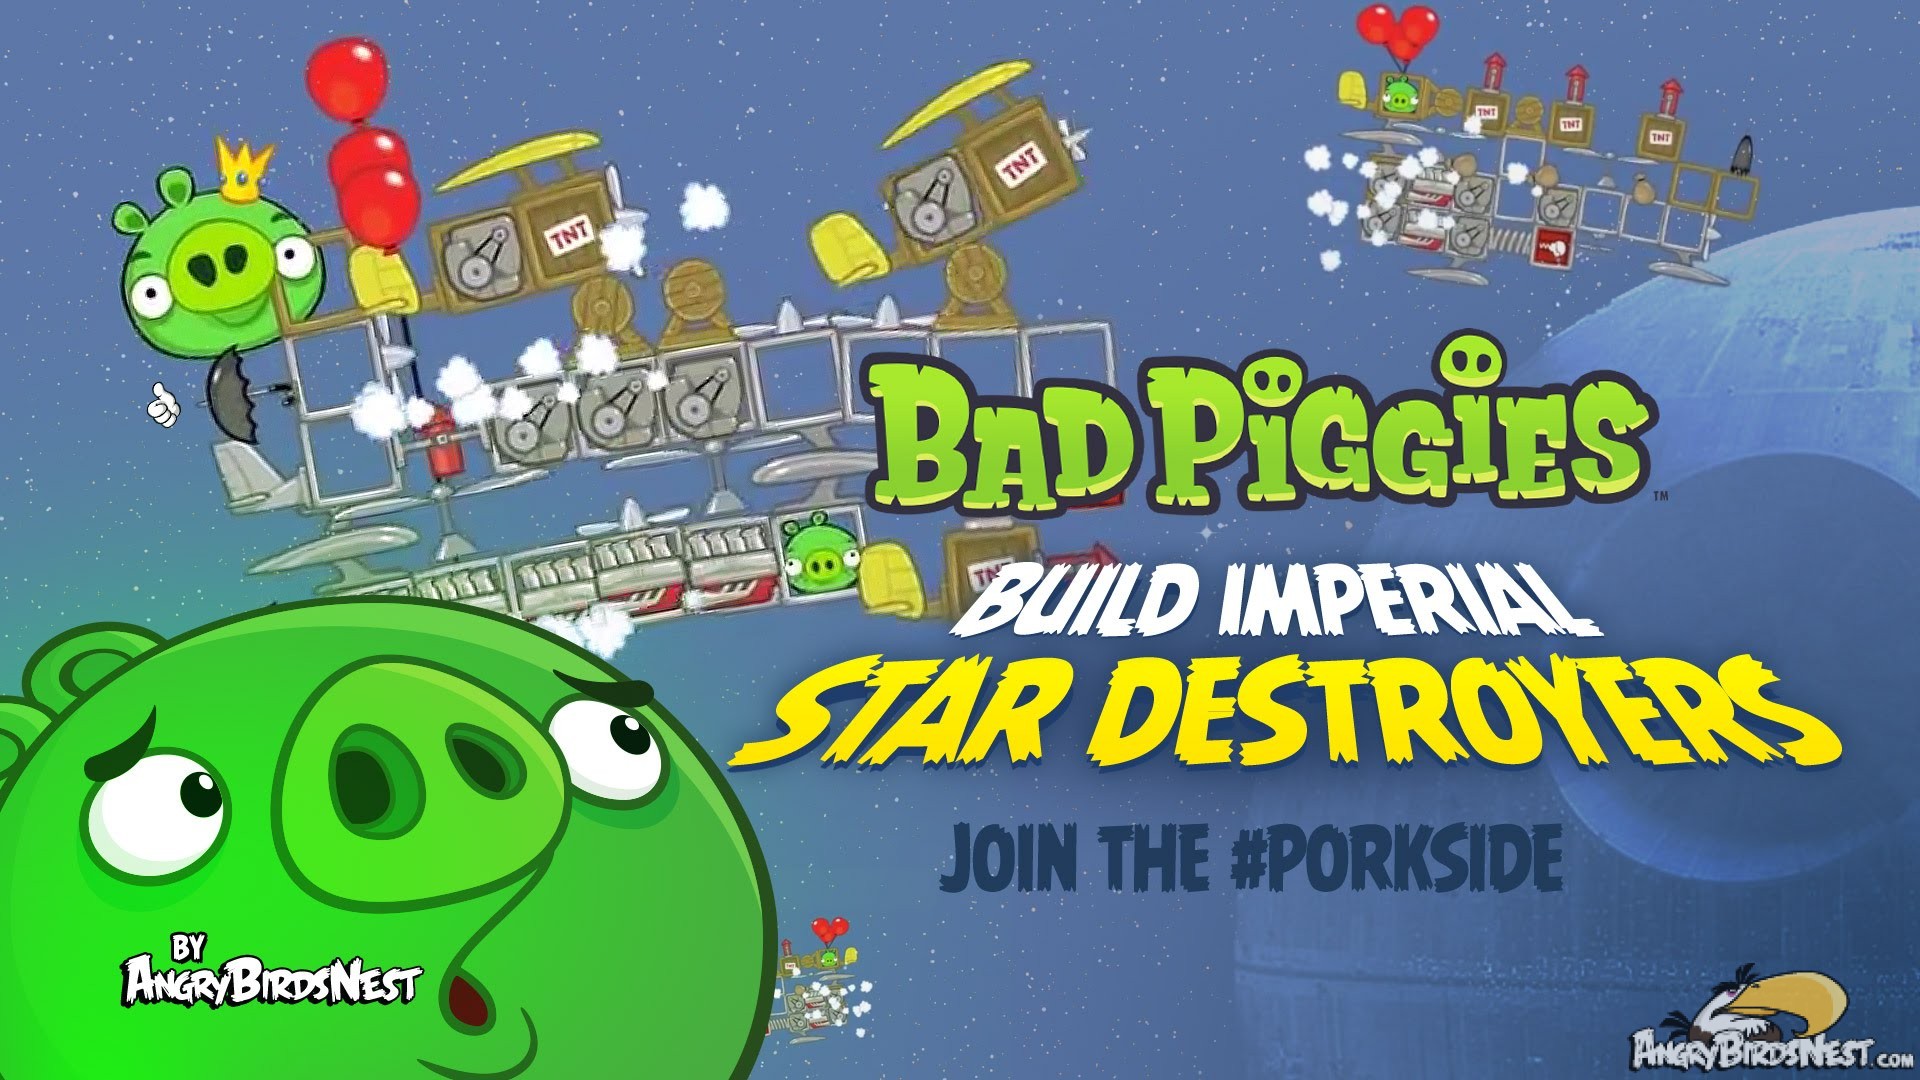 Pigineering Empire Hires Bad Piggies to Build Next Generation Star Destroyers